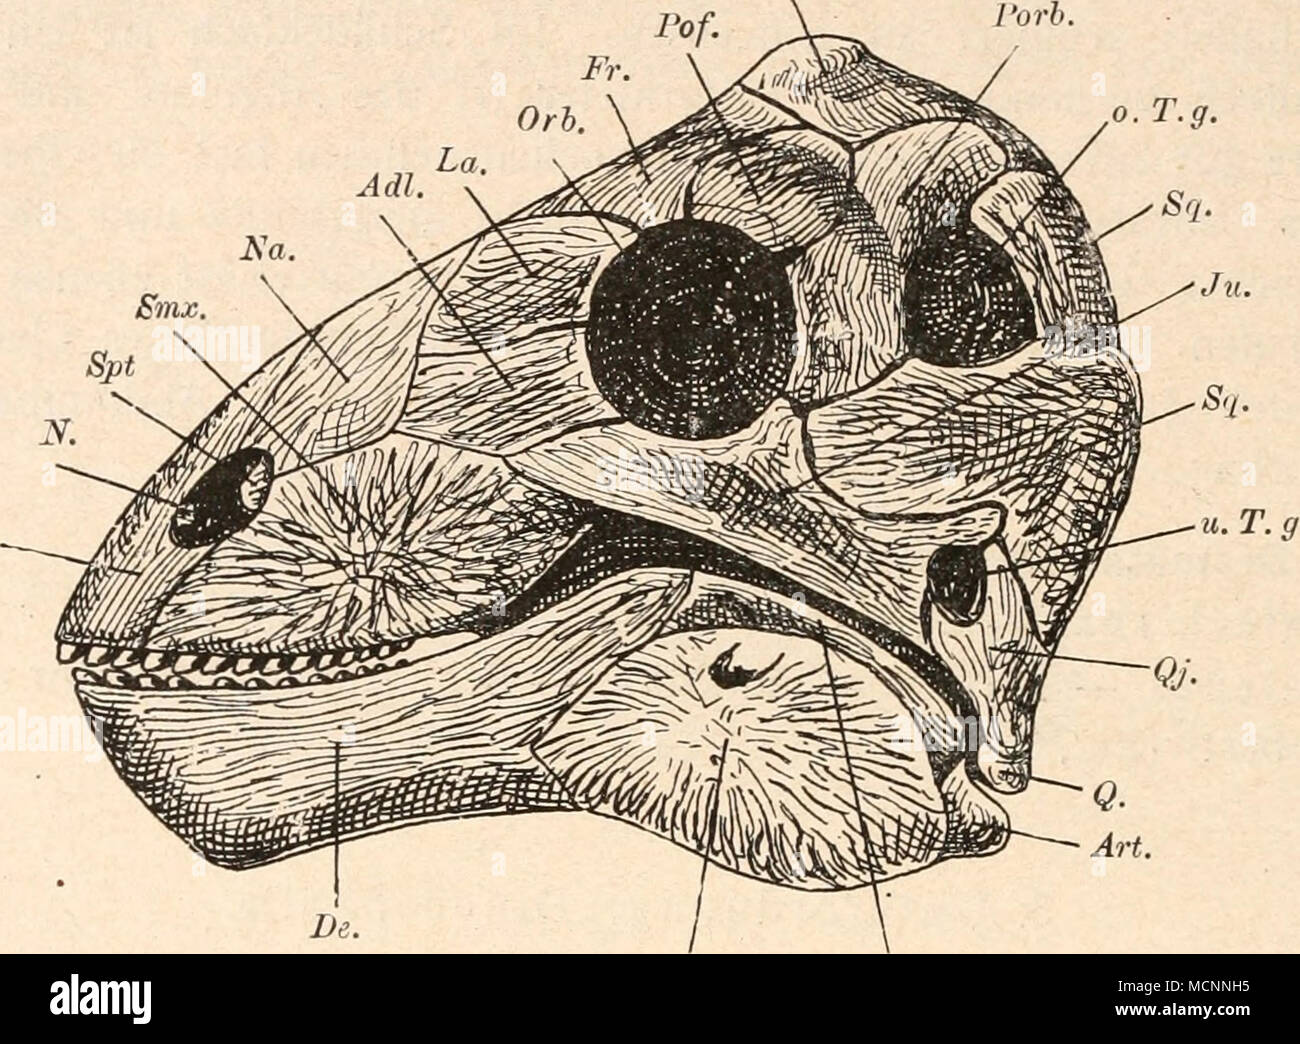 . Ana. &lt;ang. Fig. 335. Rekonstruktion des Schädels von Delphinognathus conocephalus, Seeley. aus dem Perm Südafrikas, in 1/i nat. Gr. (Nach R. Broom.) Adl. - Adlacrymale. Pa. = Parietale. Ang. = Angulare. Pof. = Postfrontale. Art. = Articulare. Porb. = Postorbitale. De. = Dentale. Pmx. = Praemaxillare. Fr. = Frontale. Q. = Quadratum. J&quot;- = Jugale. Qj. = Quadratojugale. La. = Lacrymale. Smx. = Supramaxillare. N. Nasenöffnung. Spt. = Septomaxillare. Na. = Nasale. Sang. Supraangulare. Orb. = Orbita. Sq. = Squamosum. o. T. g. = obere Temporalgrube. u. T. g. = untere Temporalgrulu F. Dinoce Stock Photo